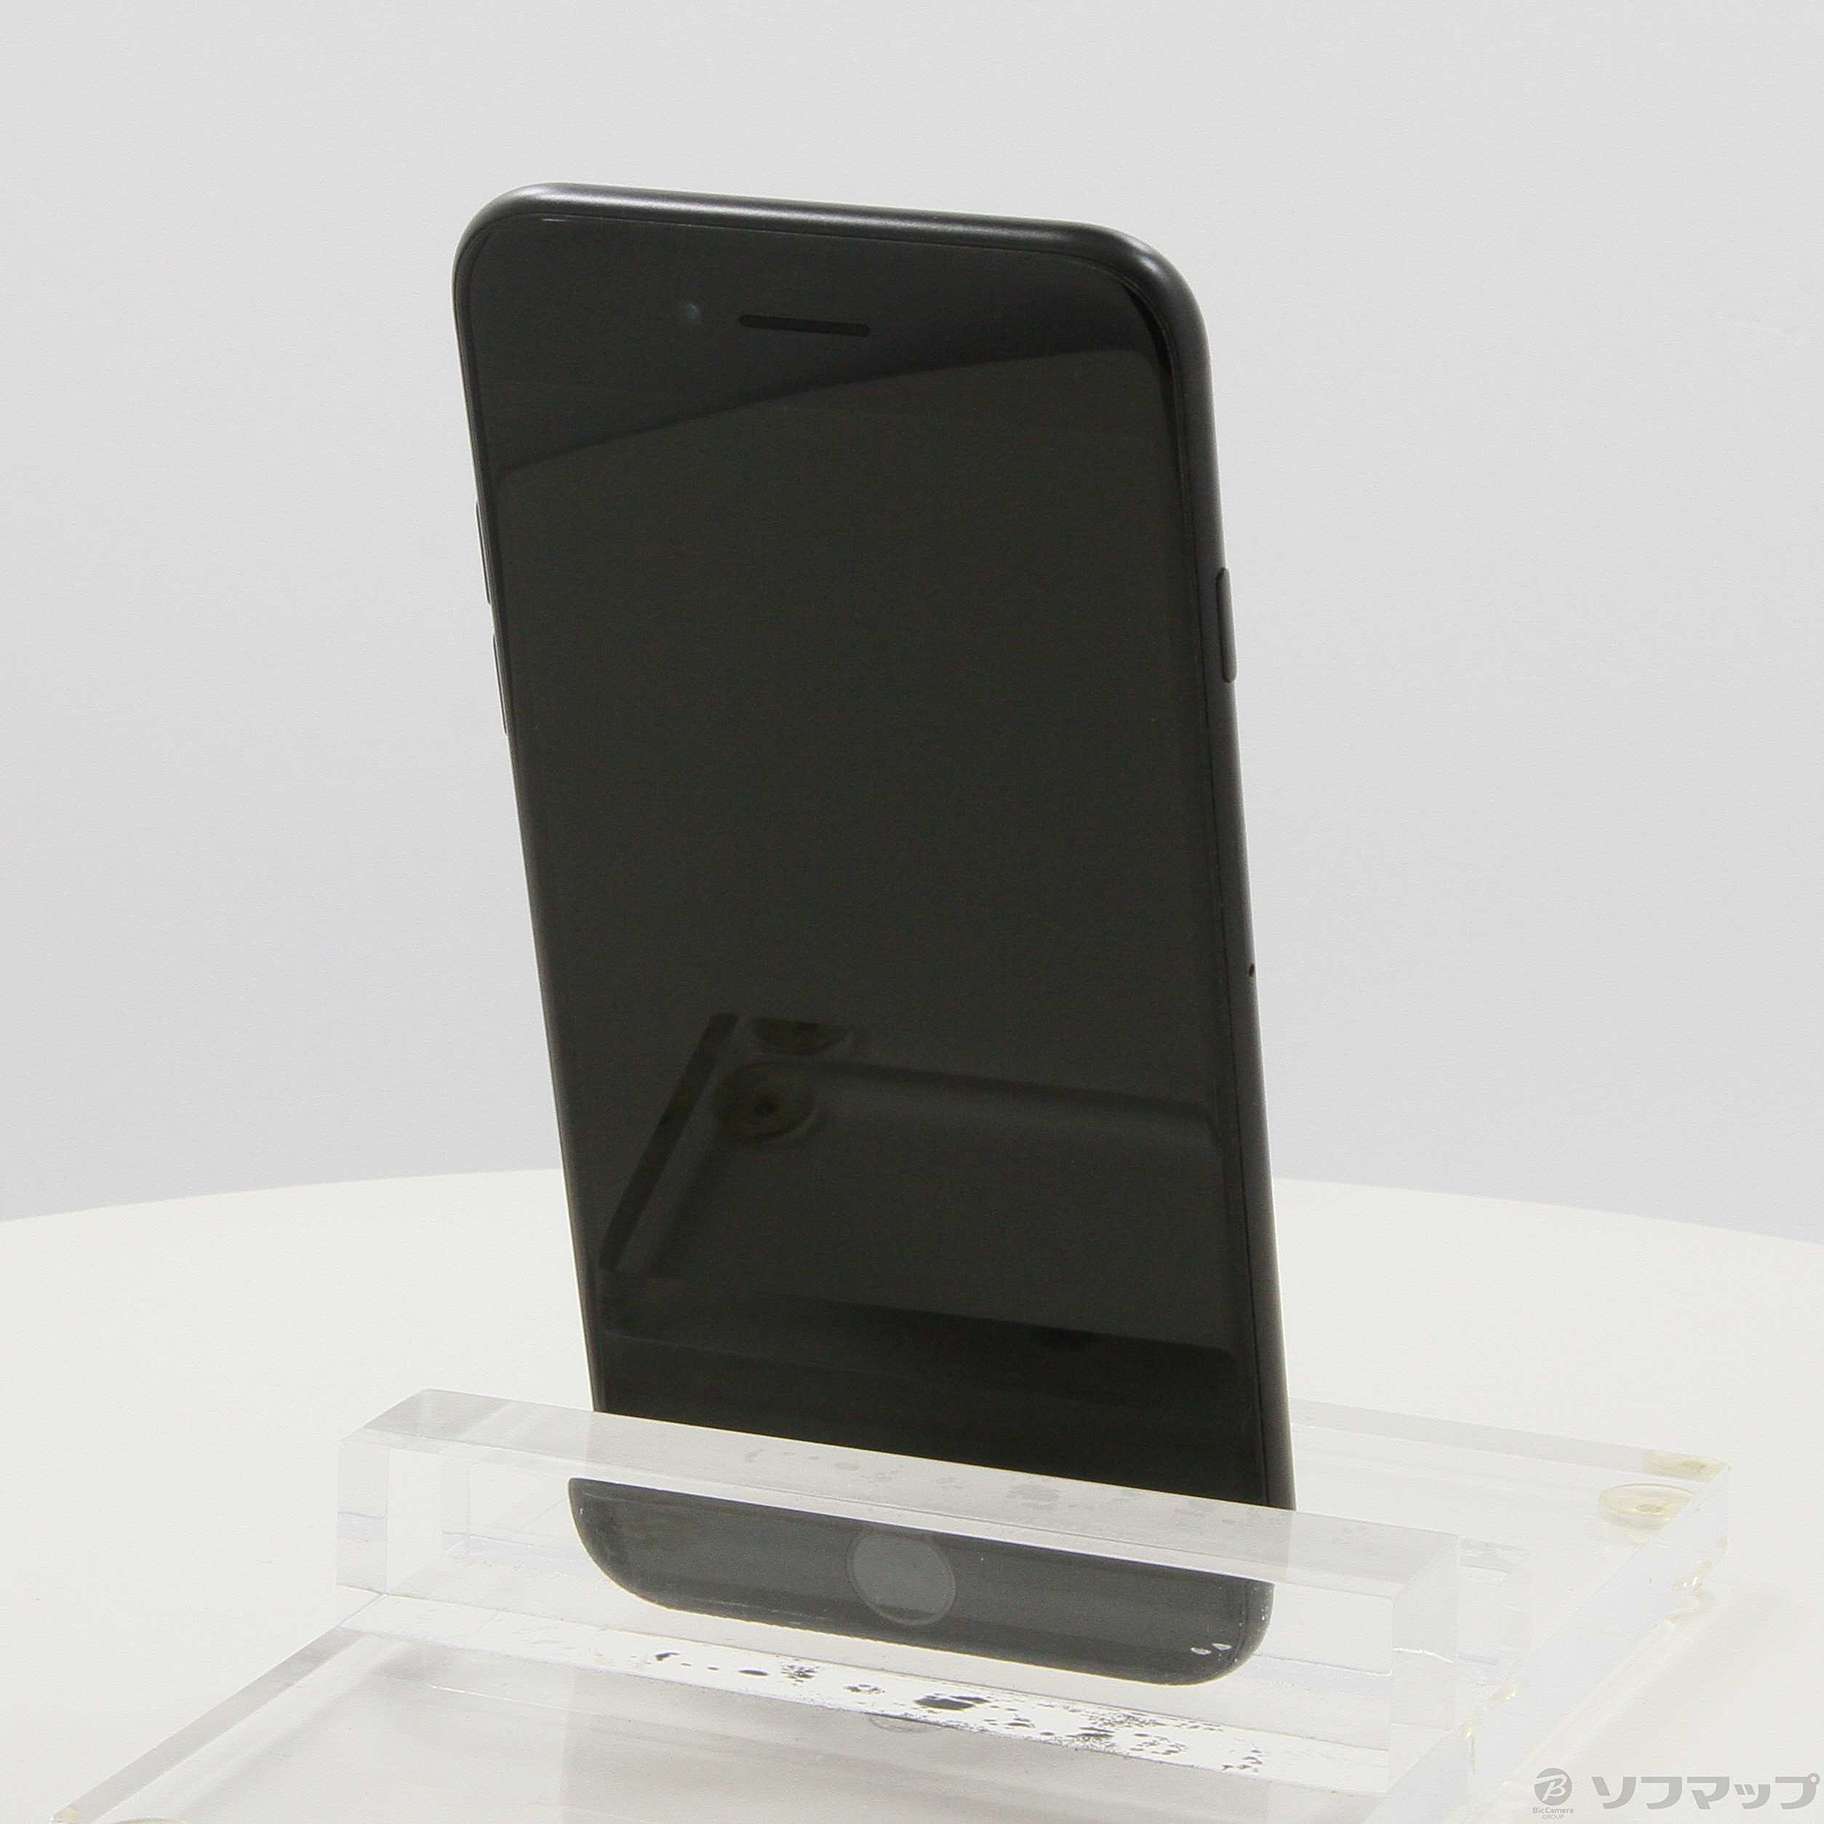 037 iPhone SE 第2世代 64GB ブラック/シムフリー/BT94%側面軽度な傷あり